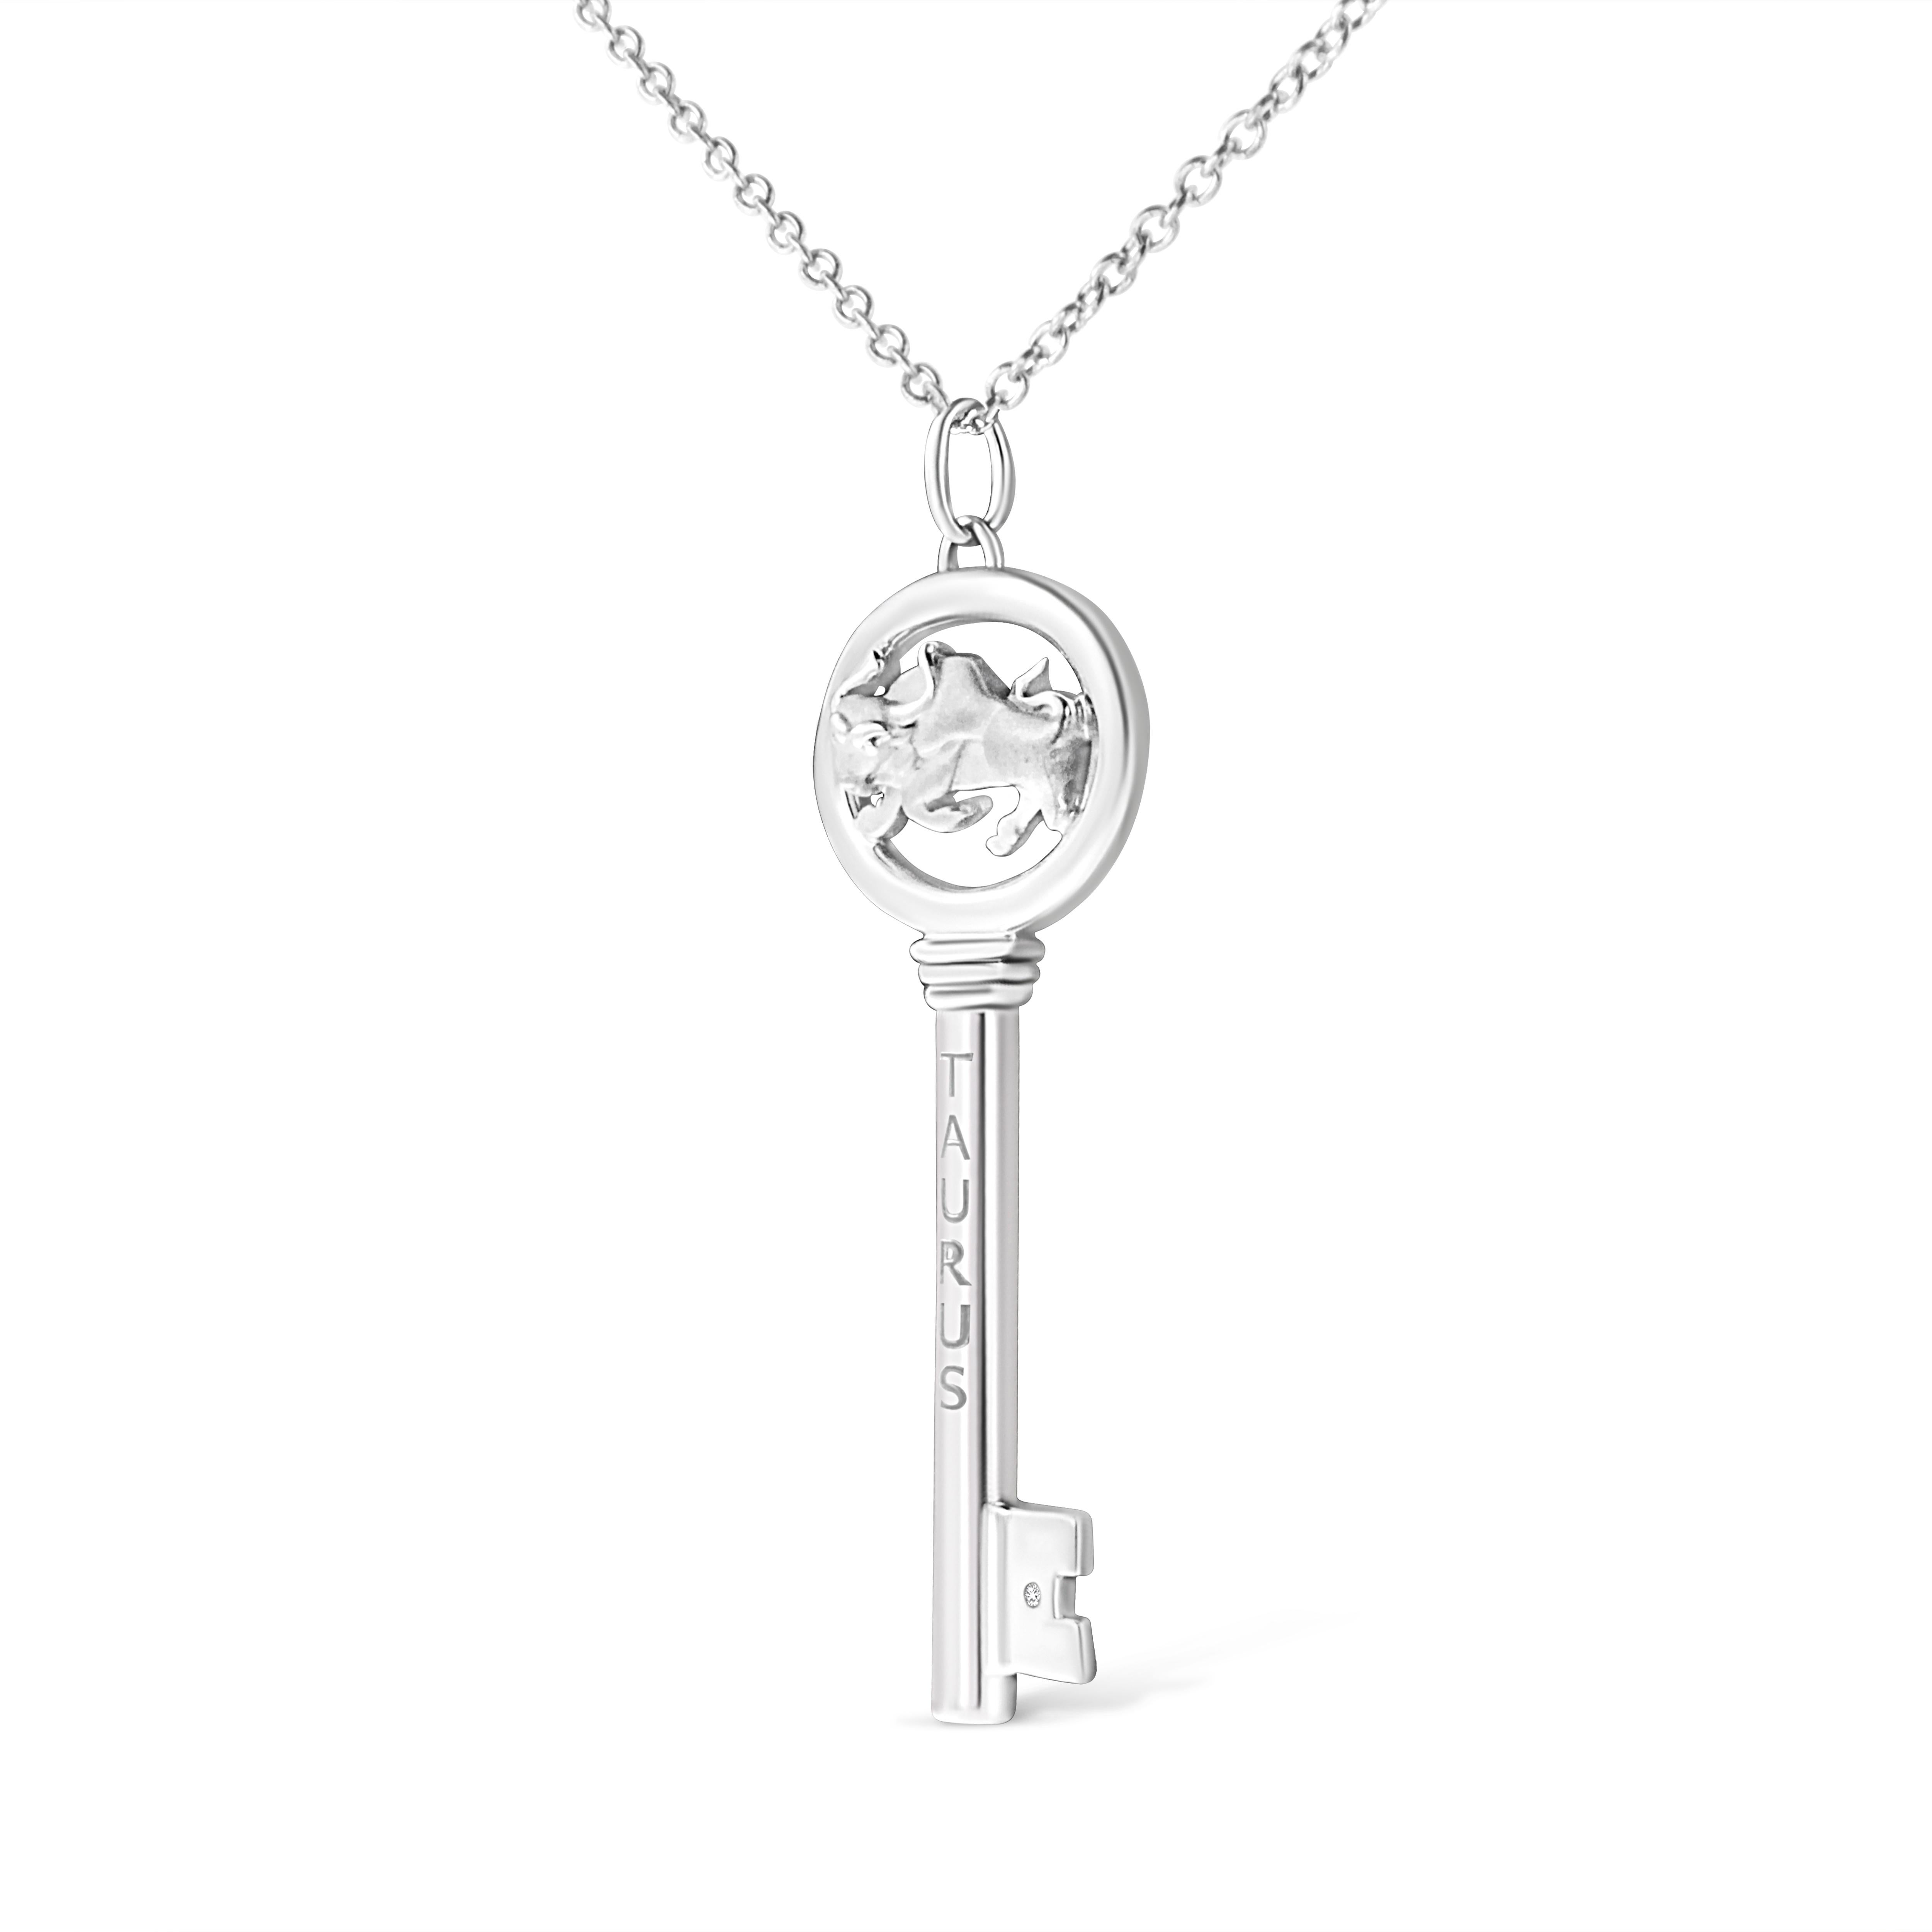 Contemporary .925 Sterling Silver Diamond Accent Taurus Zodiac Key Pendant Necklace